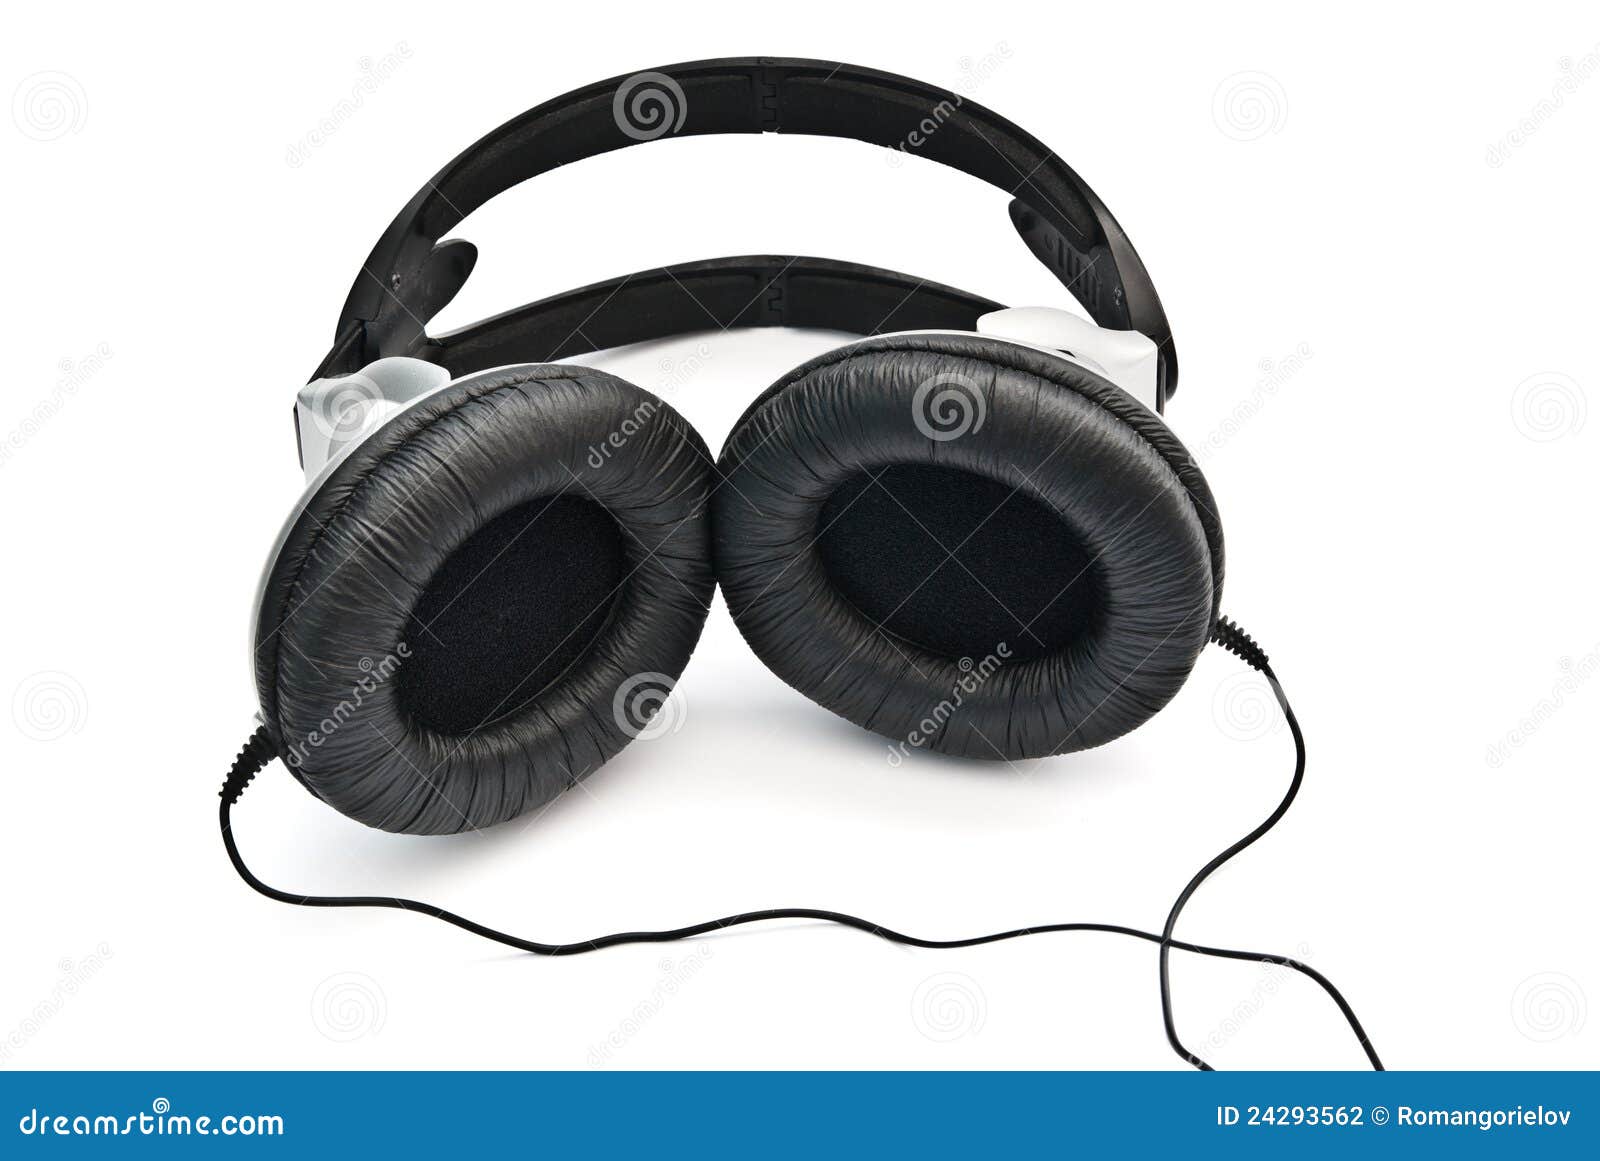 Headphones stock photo. Image of music, stereo, professional - 24293562